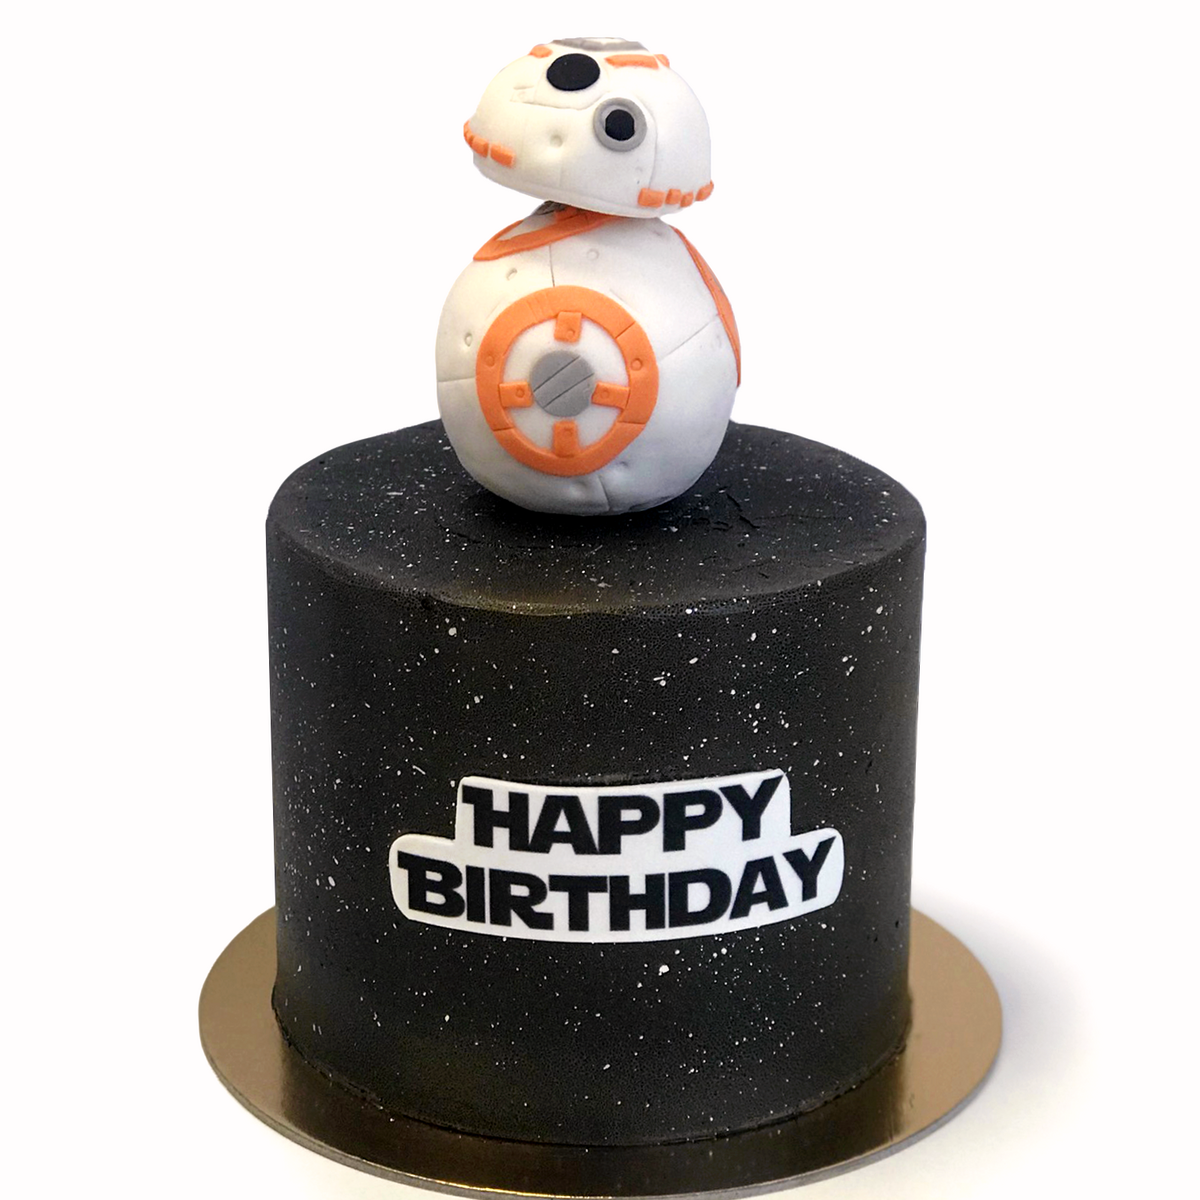 Whippt Kitchen - Star Wars droid cake